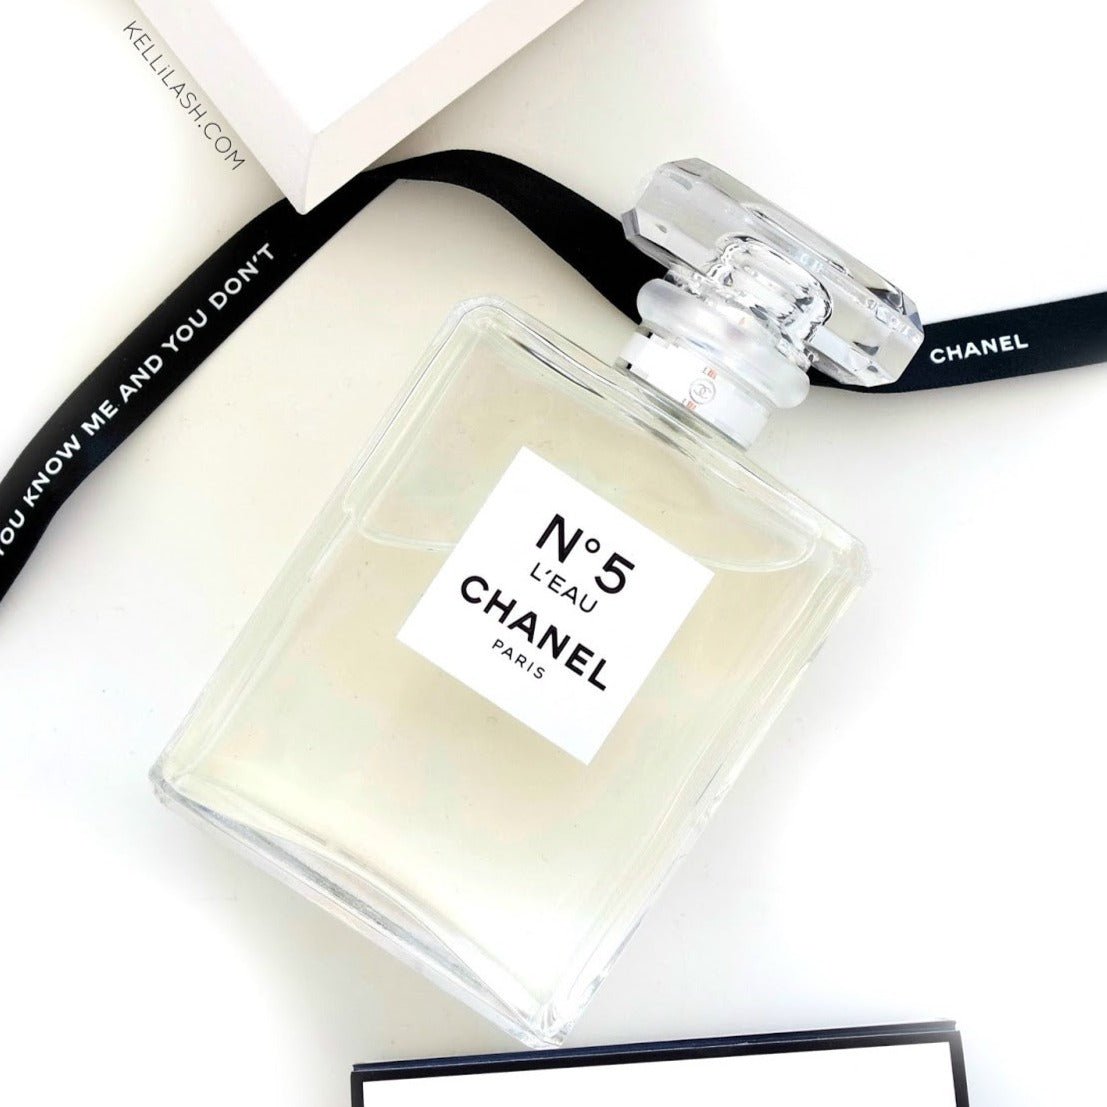 Chanel N°5 L'Eau EDT | My Perfume Shop Australia